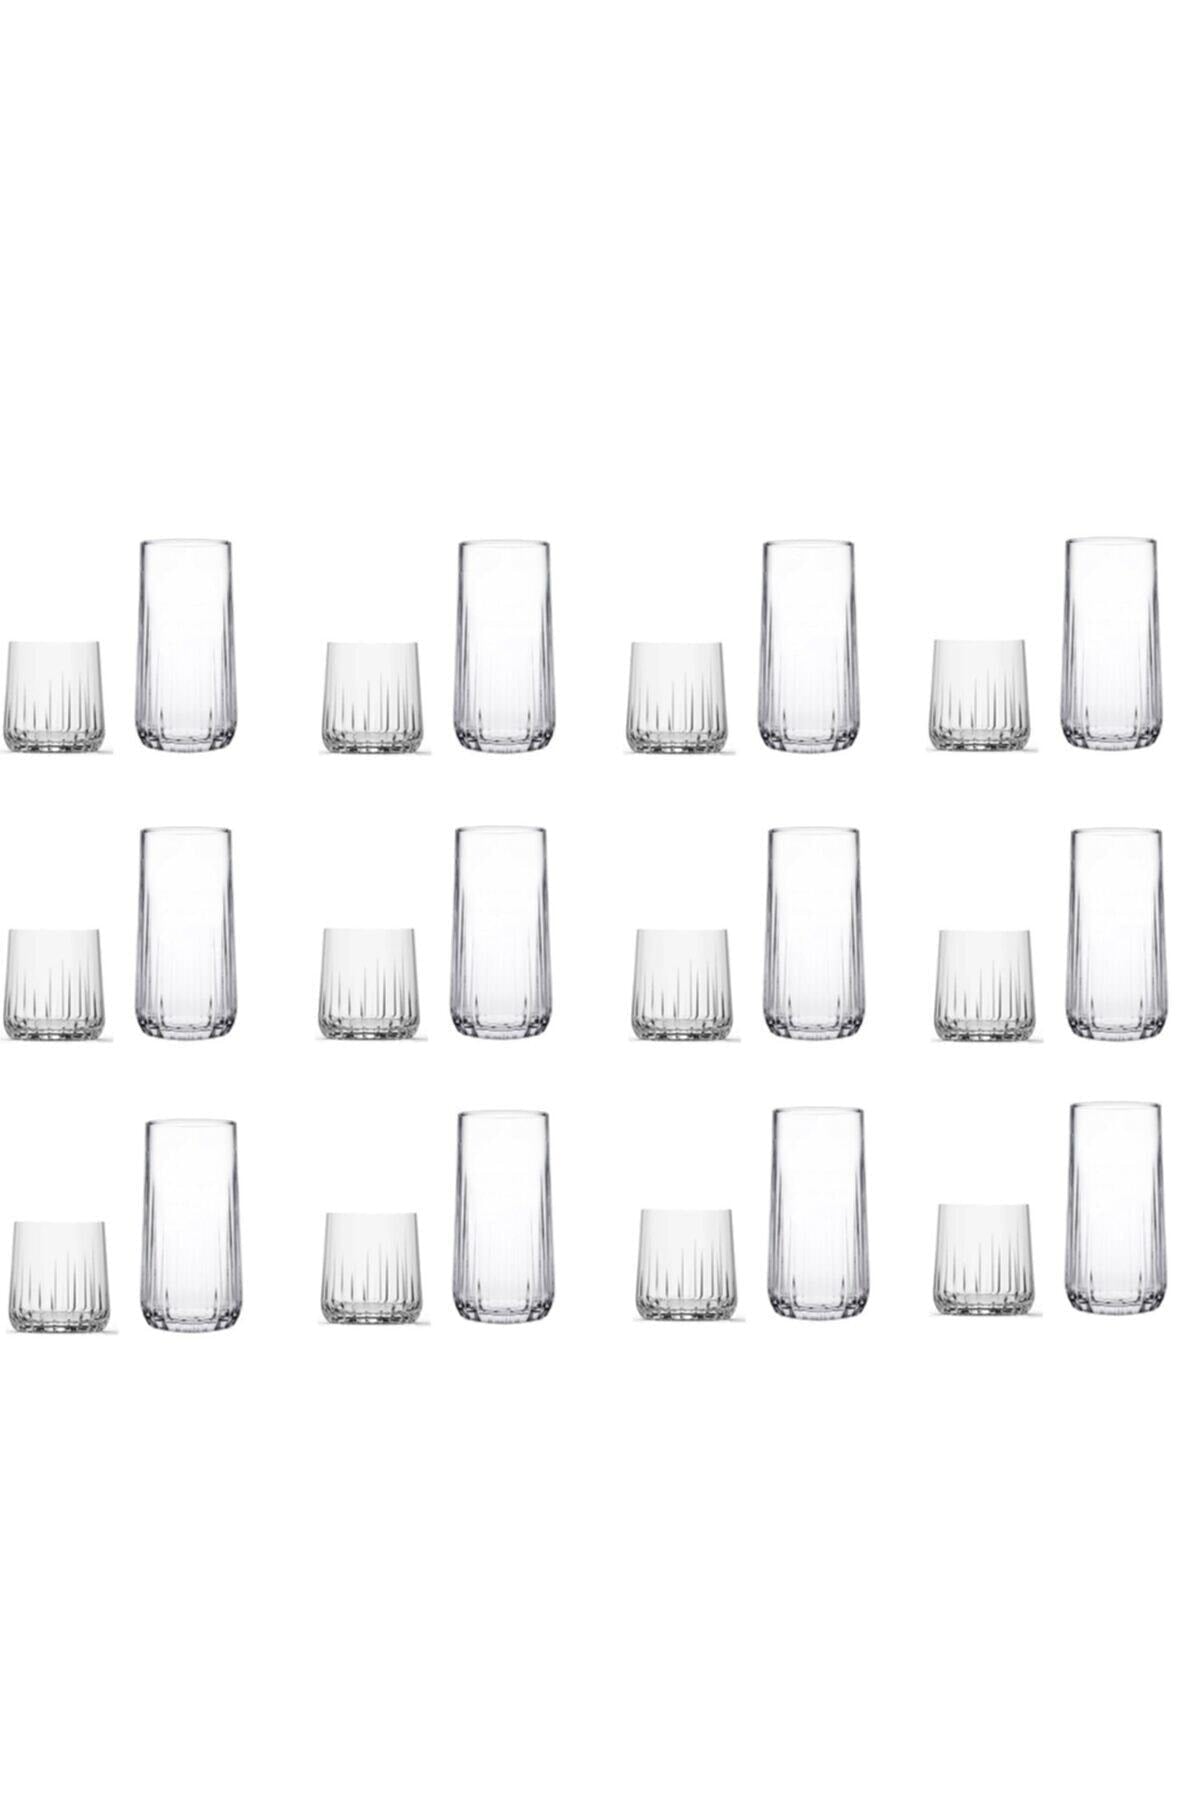 Nova Water and Beverage Glass Set 24 Pieces Fma477636 Fma77698 332